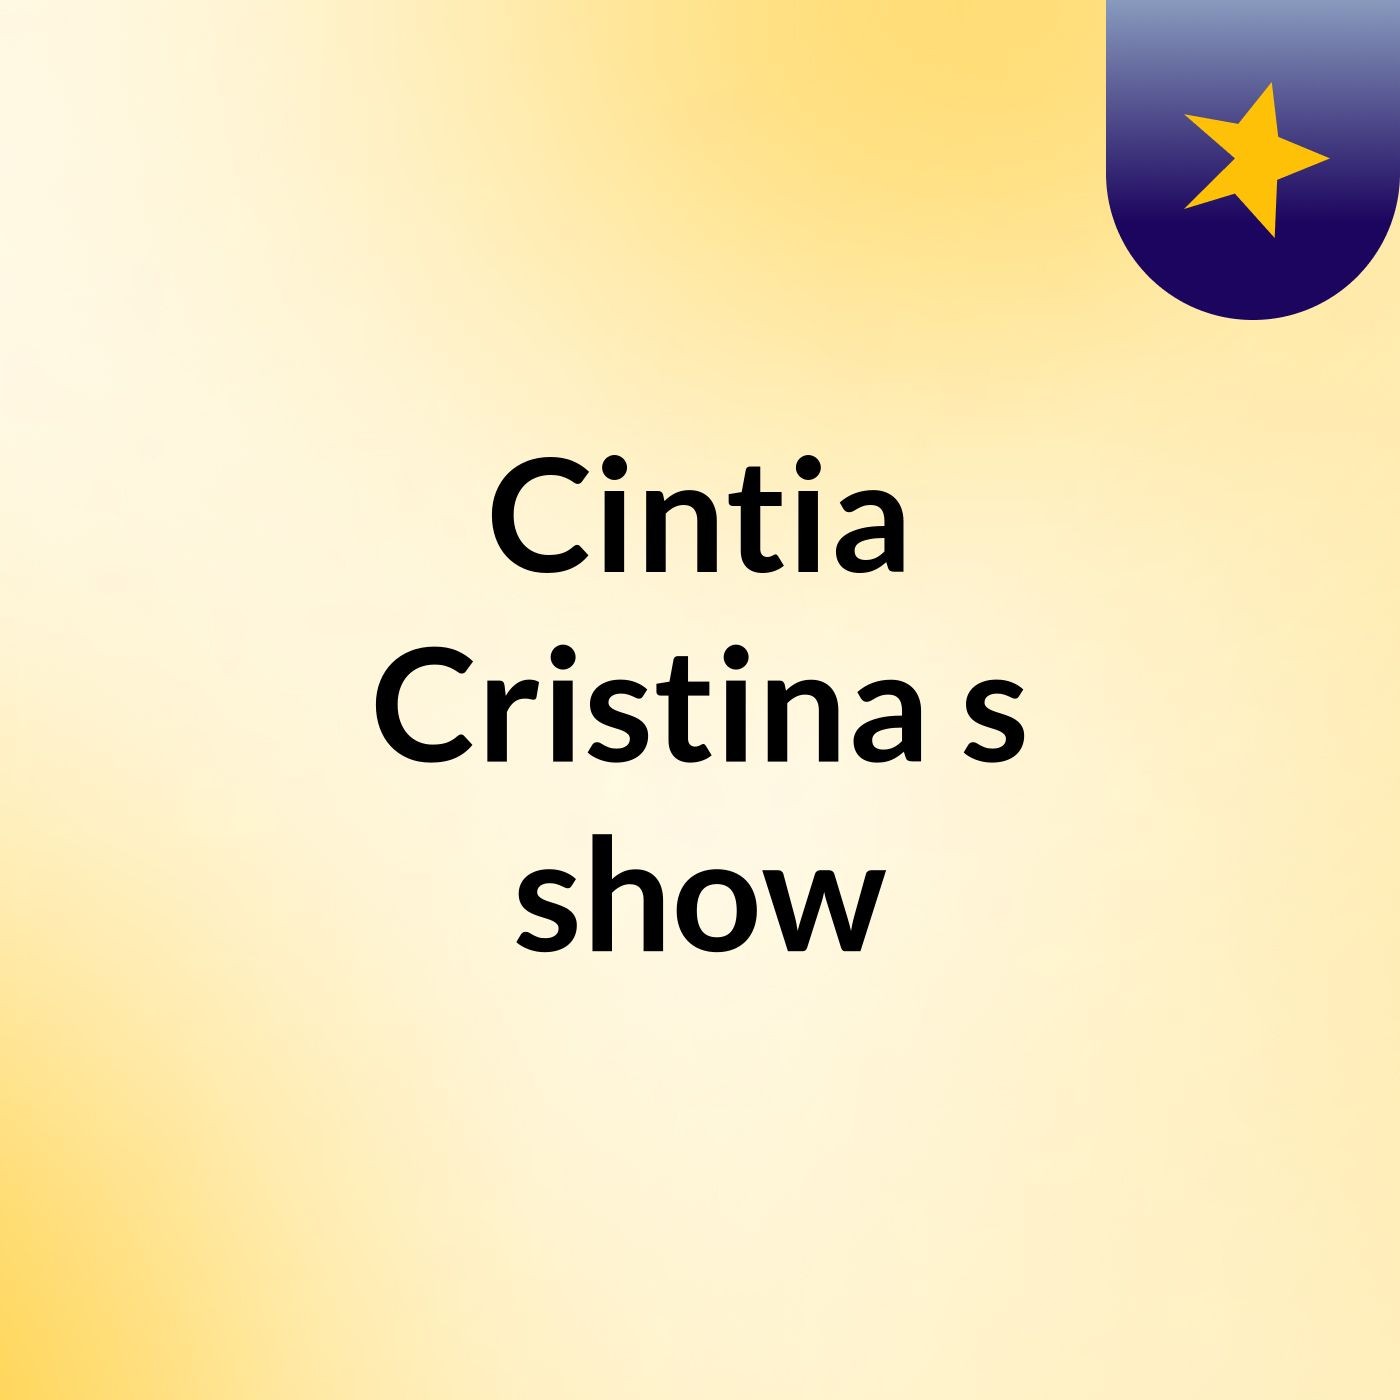 Cintia Cristina's show